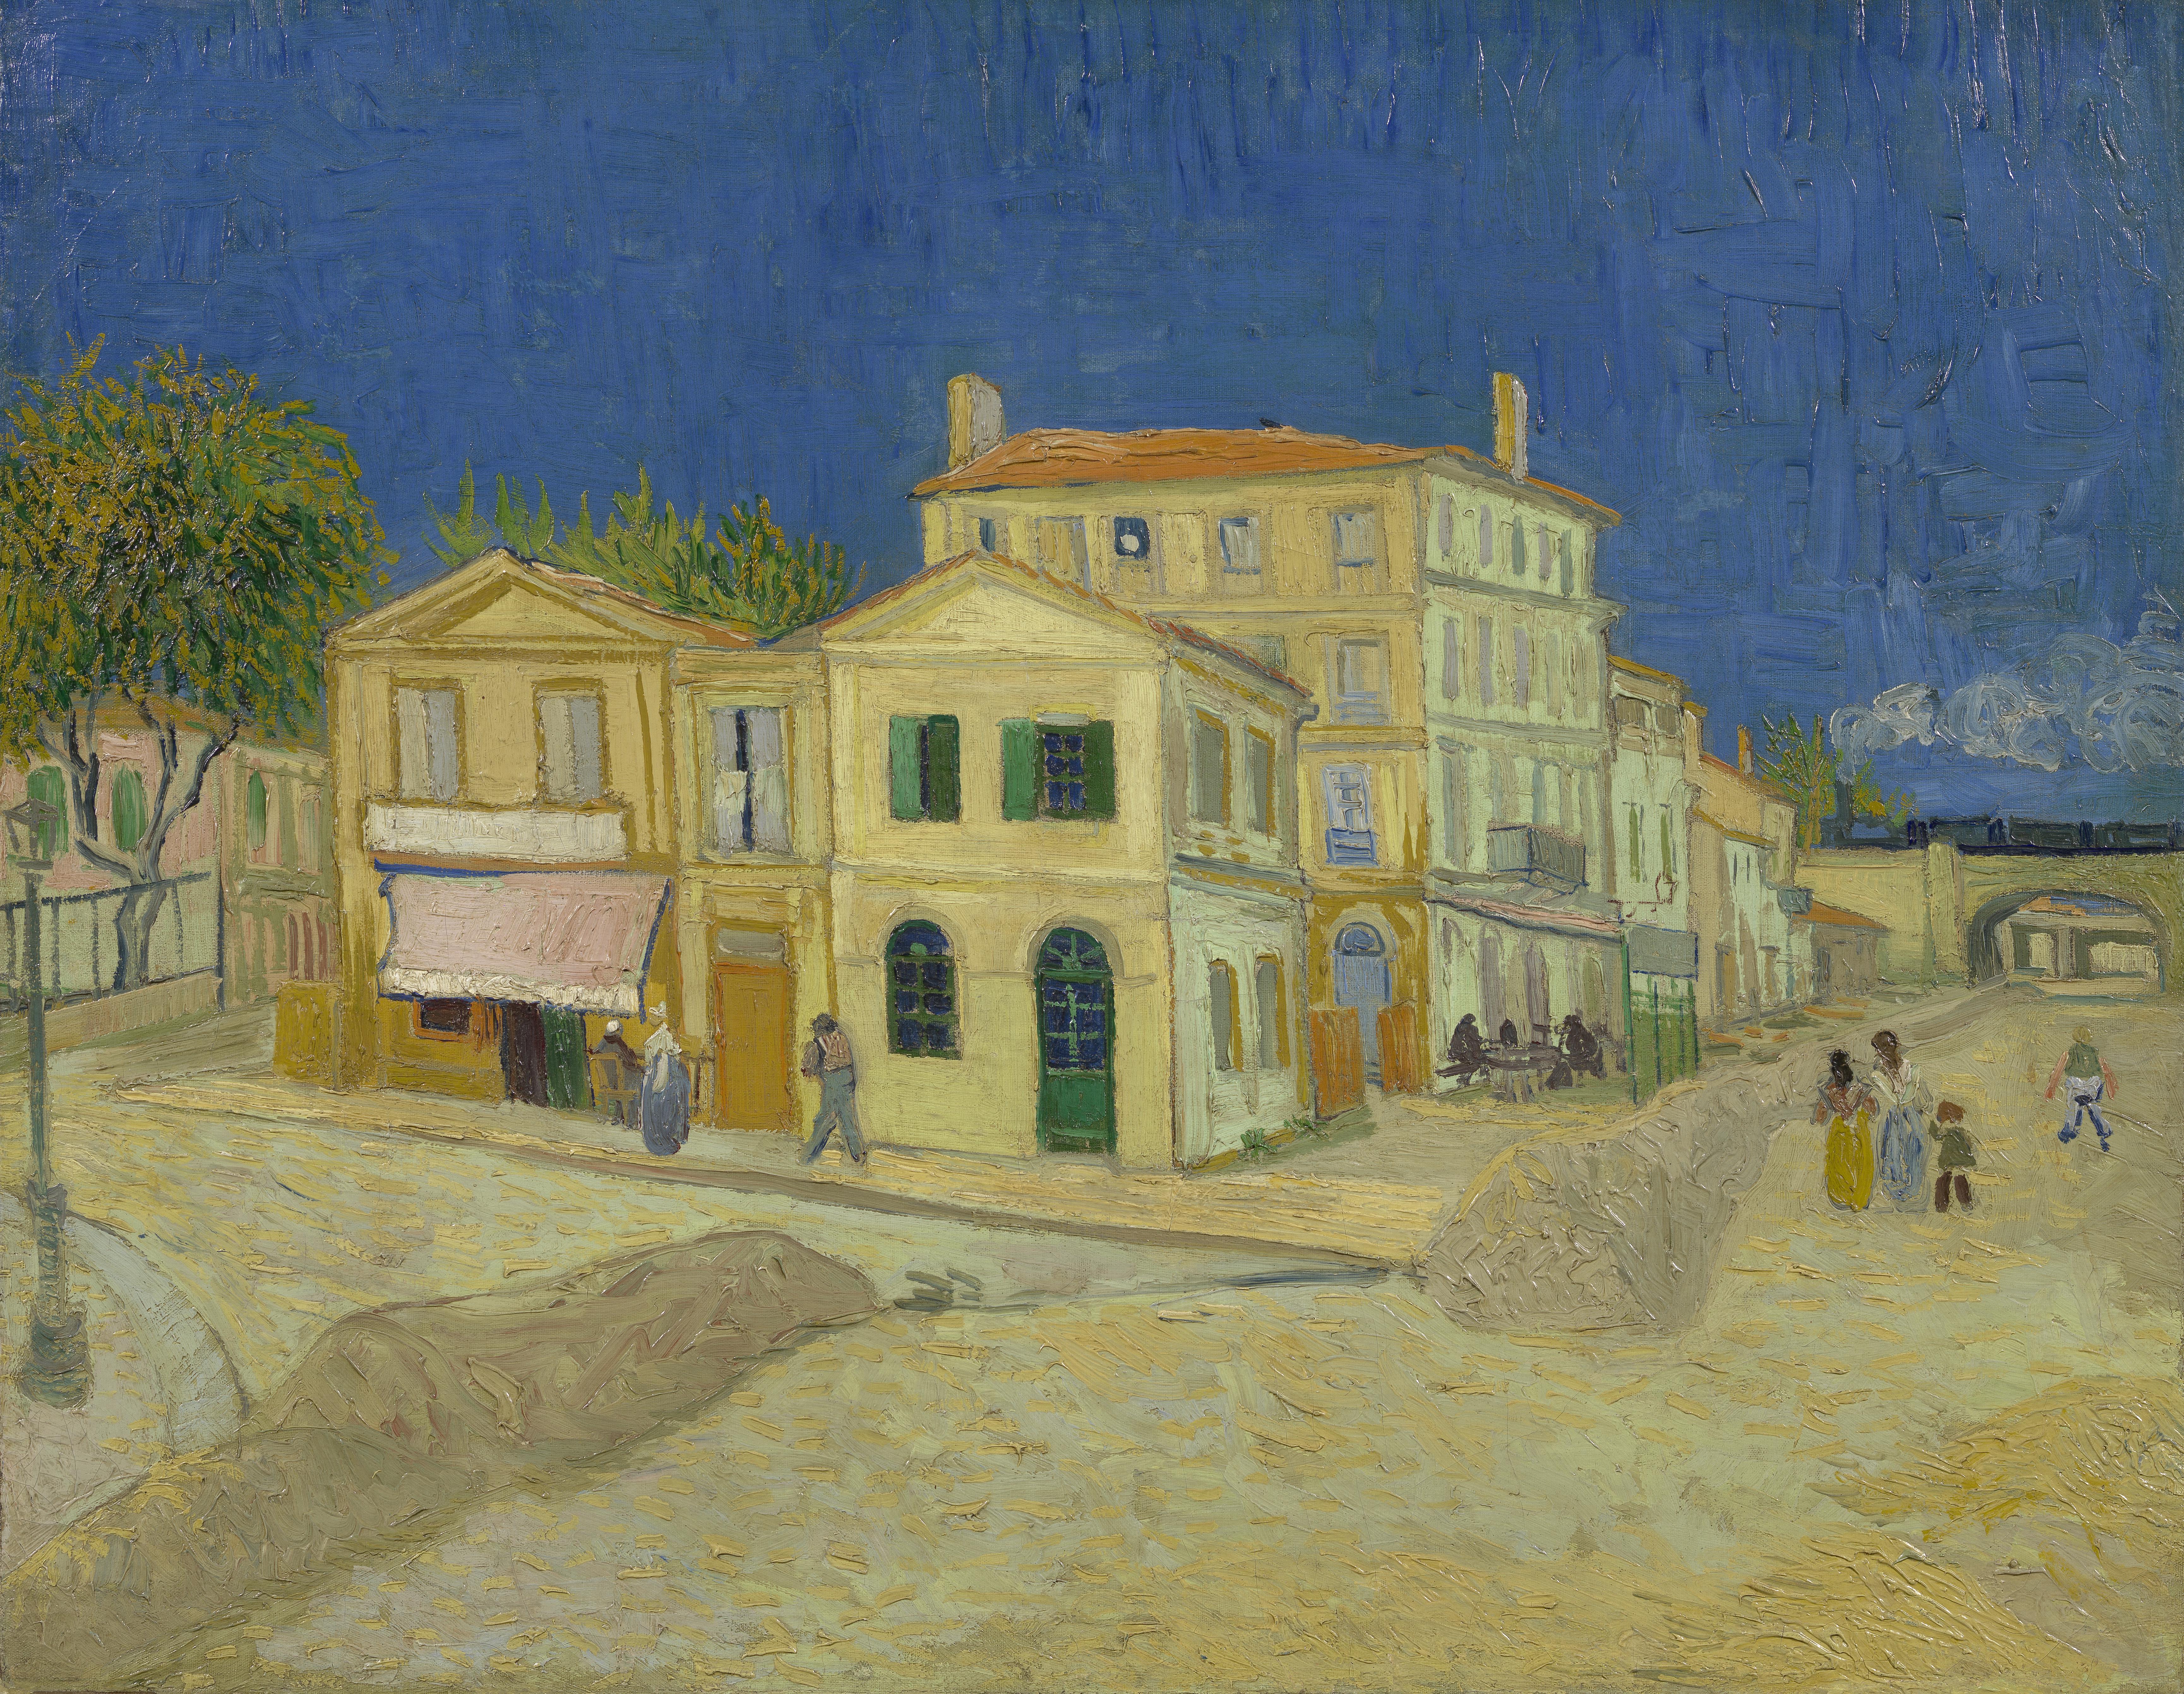 "The Yellow House" Van Gogh